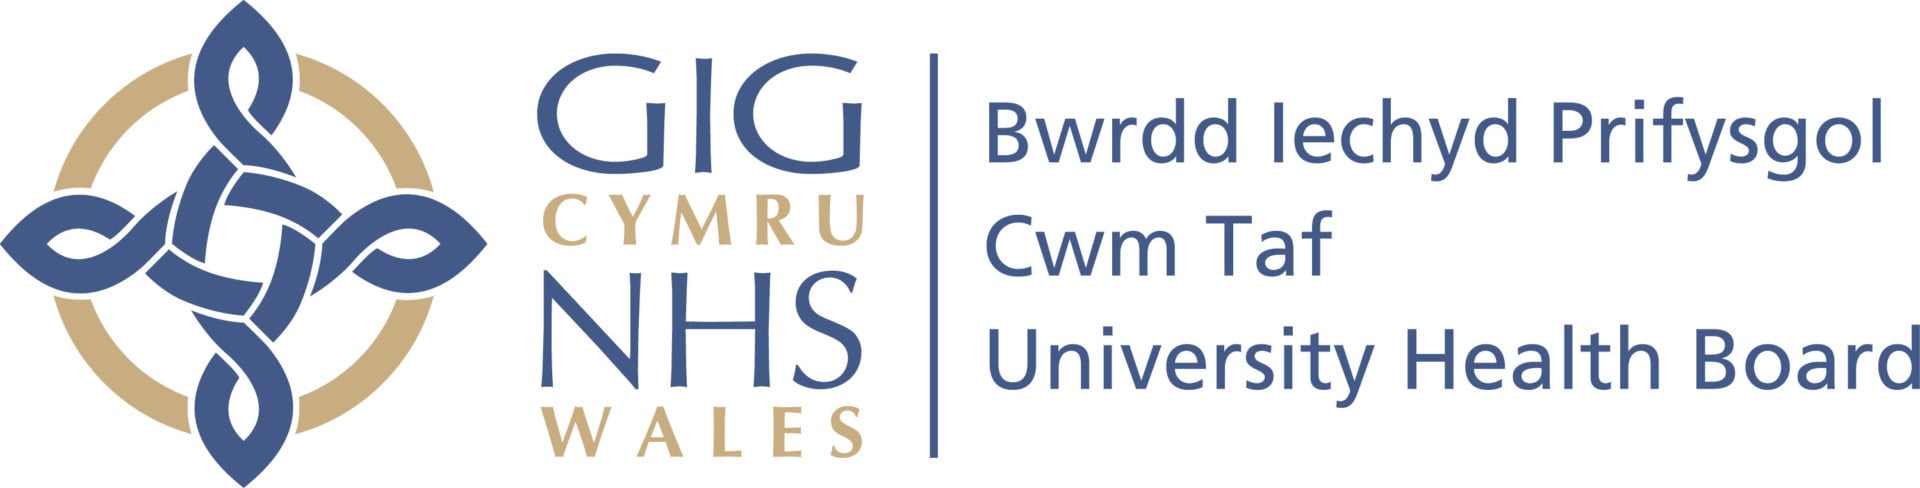 NHS Wales University Health Board Logo